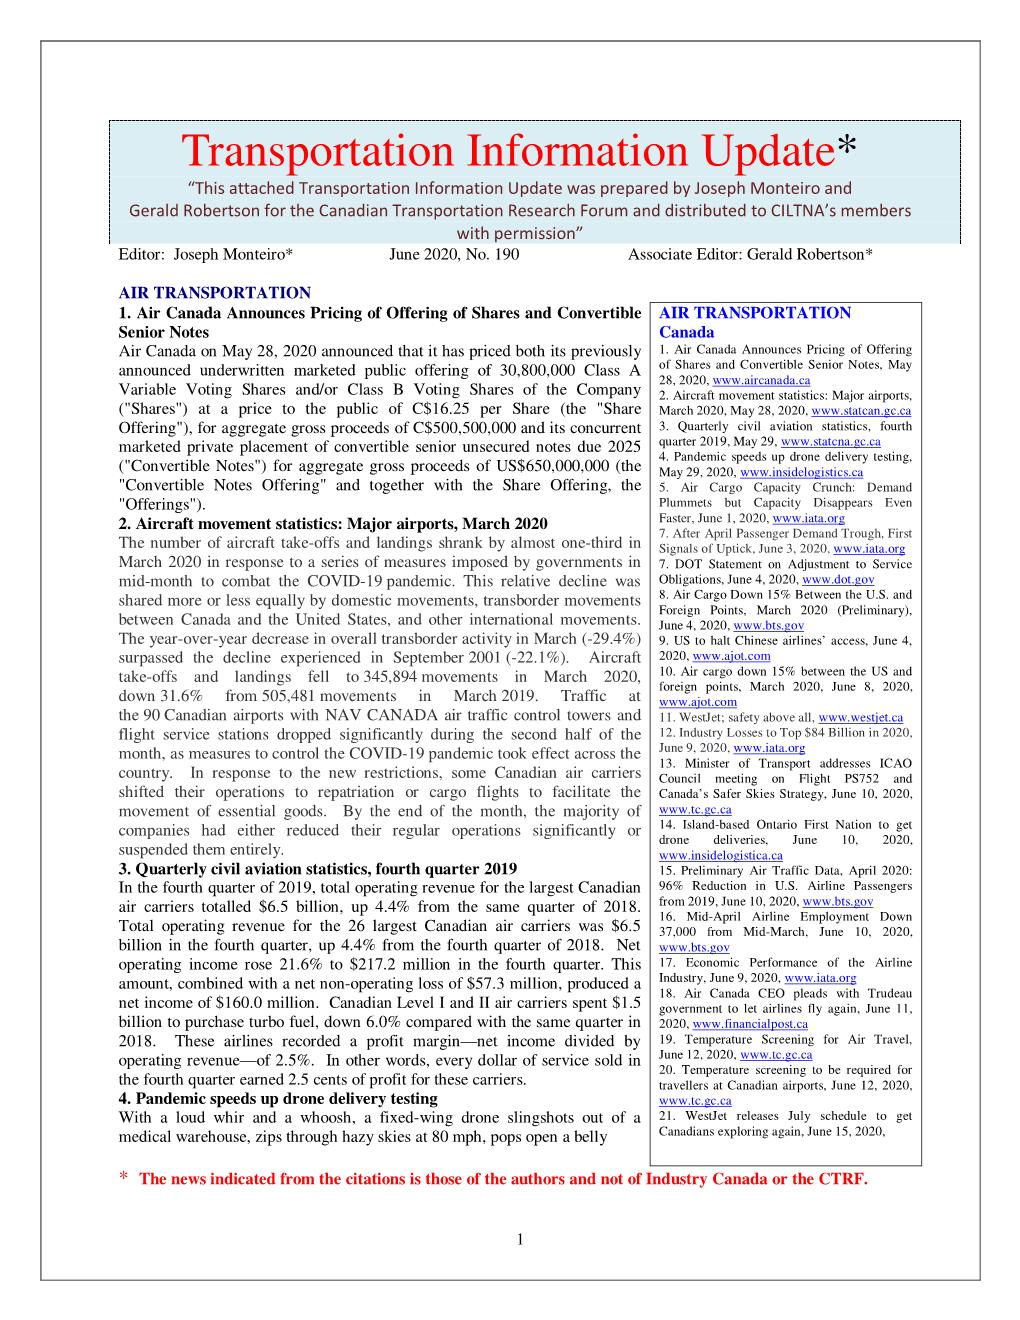 Transportation Information Update, June 2020